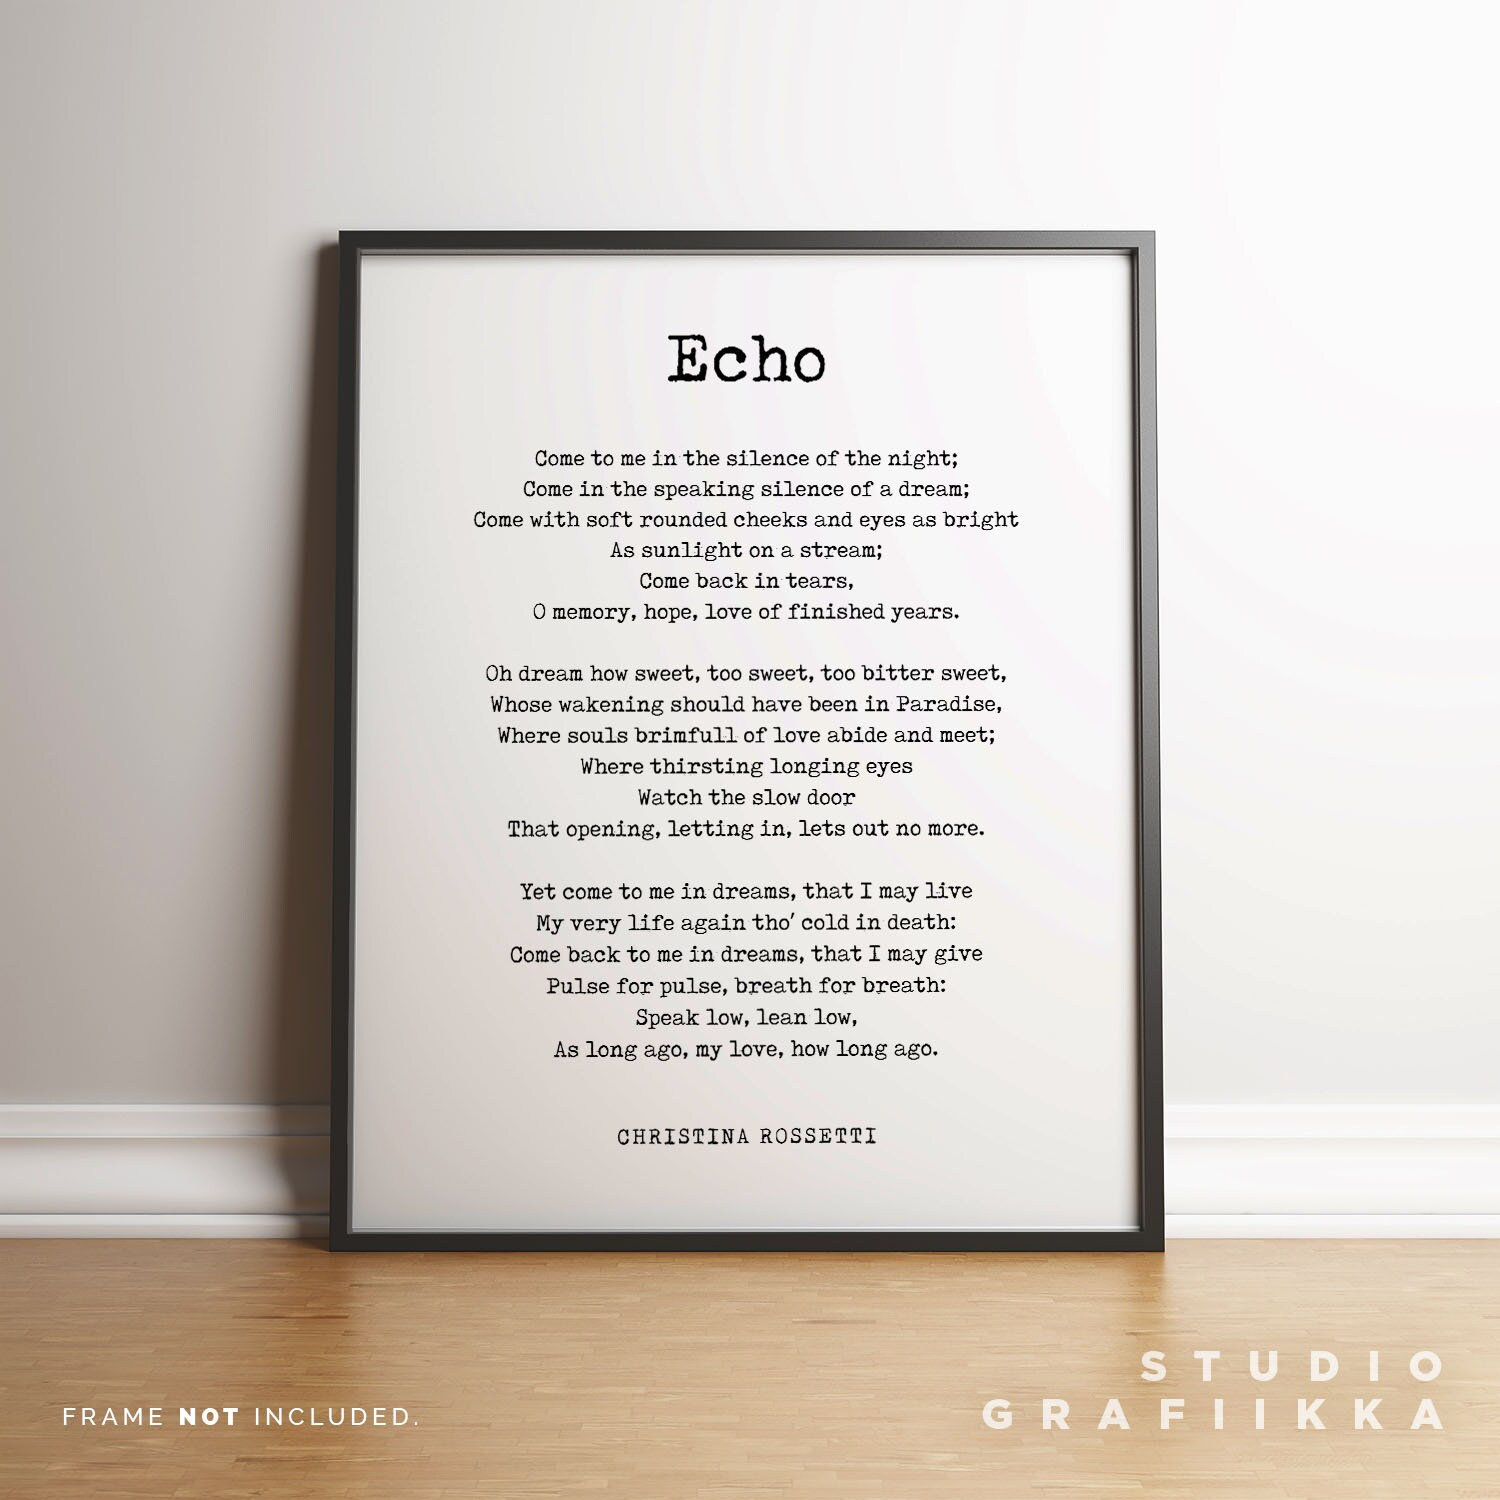 echo poem by christina rossetti